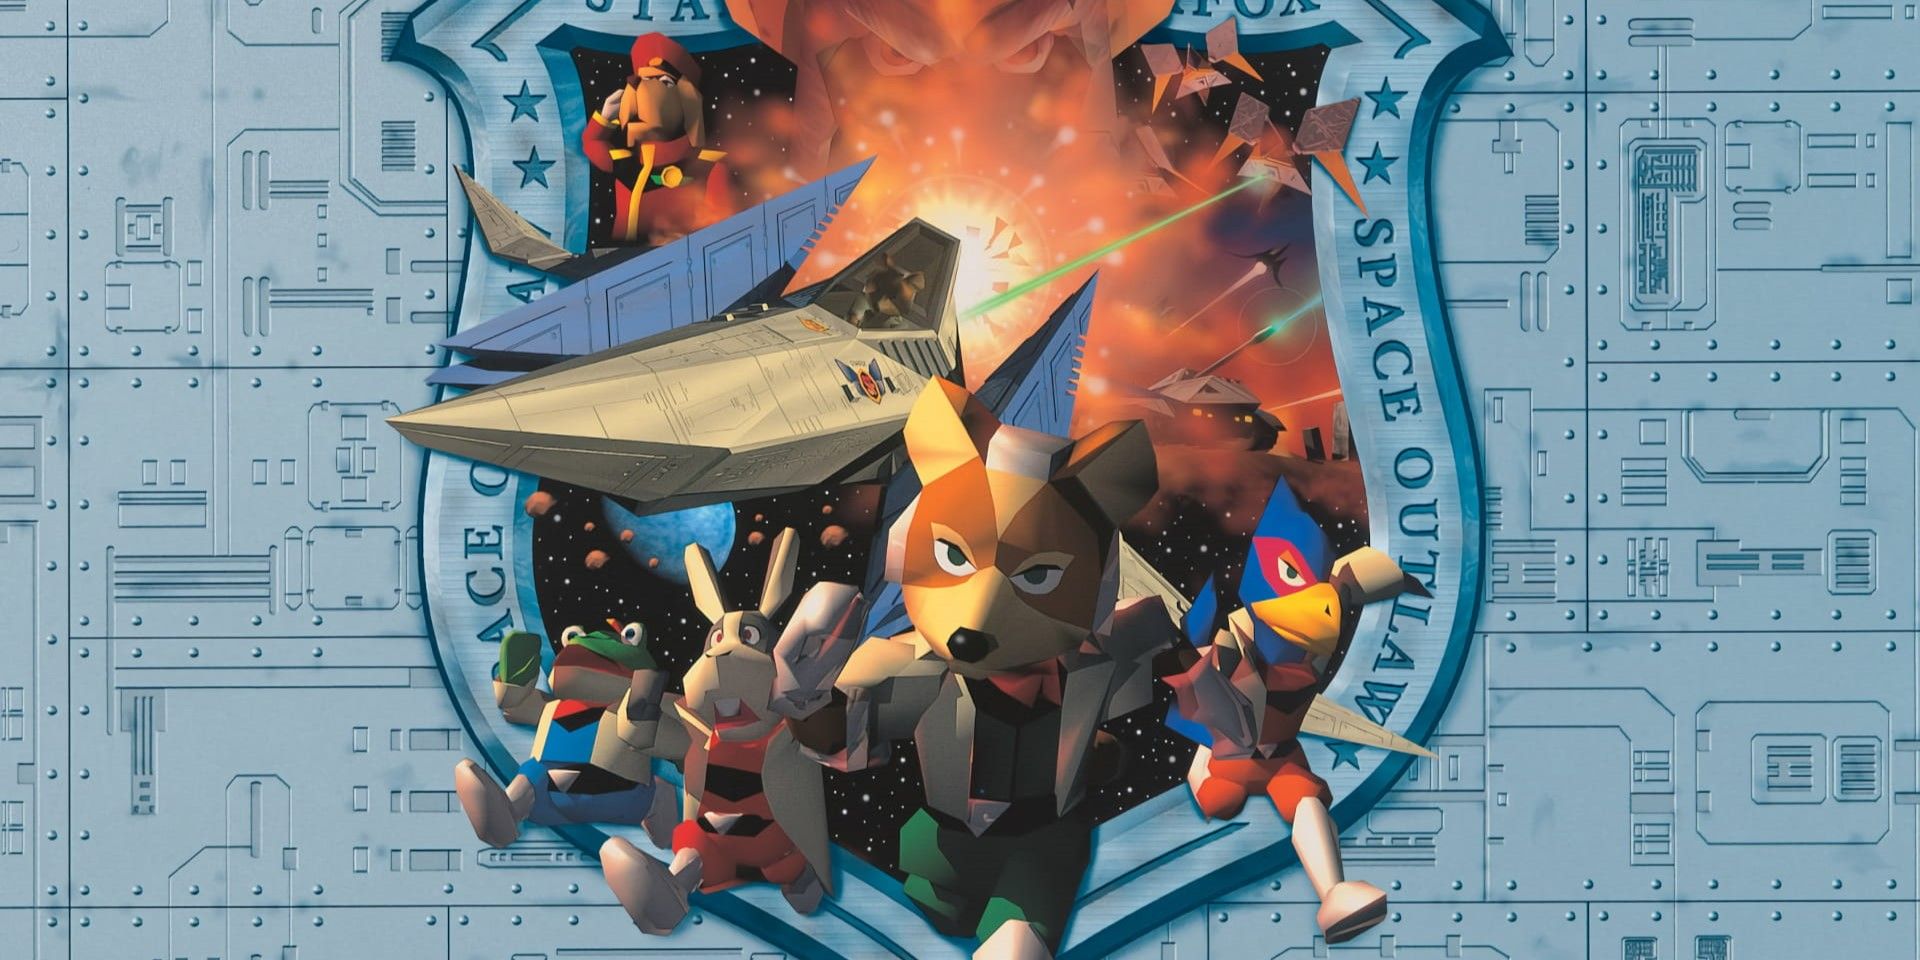 Star Fox 64 characters run toward the viewer